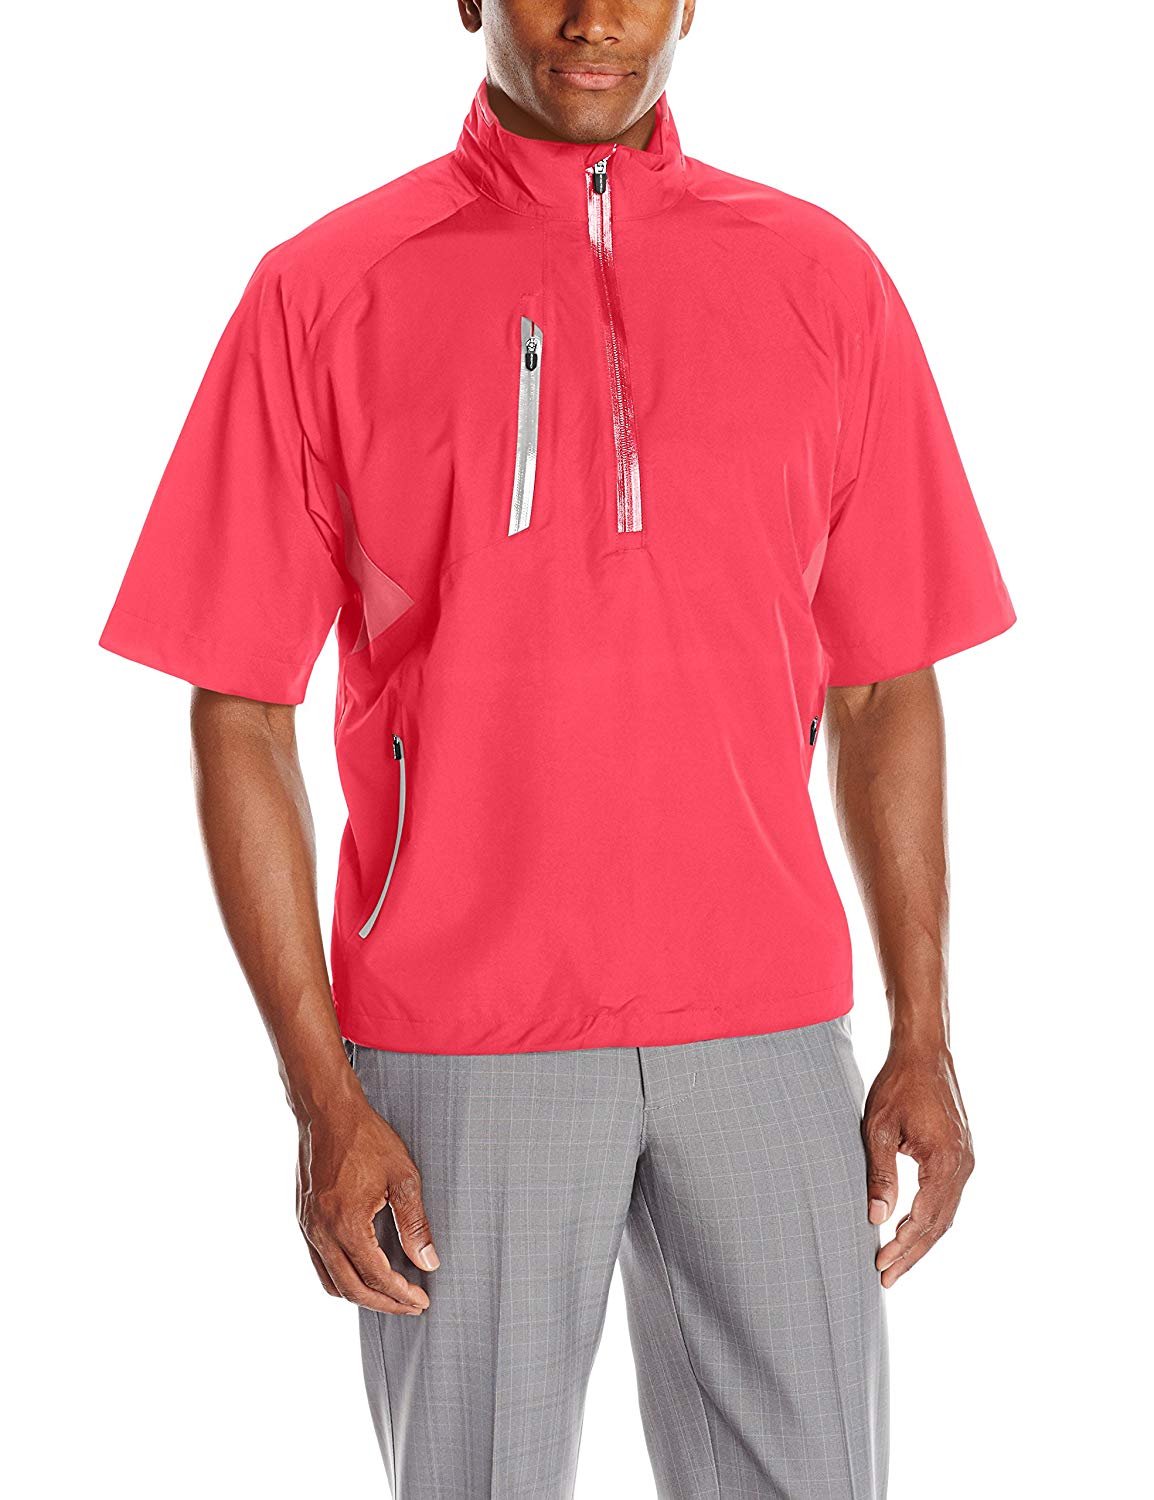 Mens Zero Restriction Pinnacle Golf Pullovers